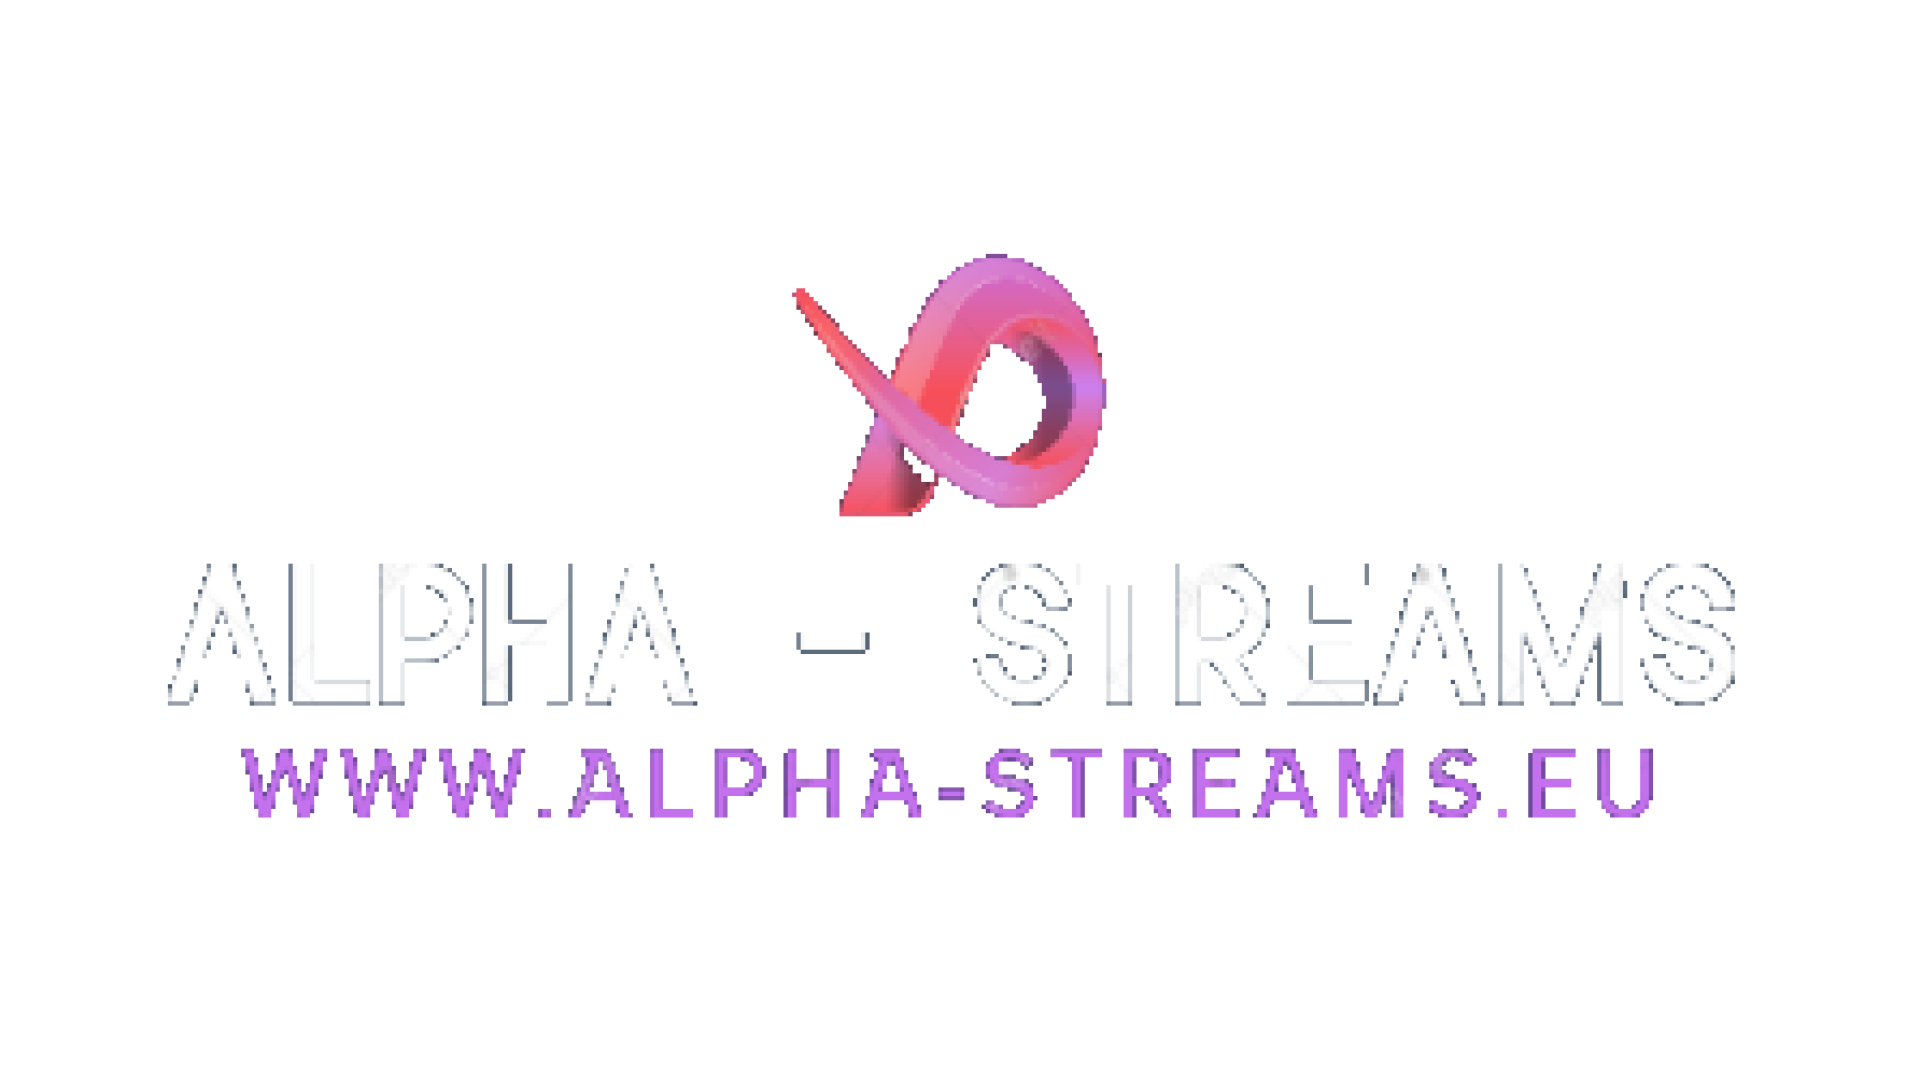 Alpha – Streams Υπηρεσίες φιλοξενίας με ασφάλεια και αξιοπιστία